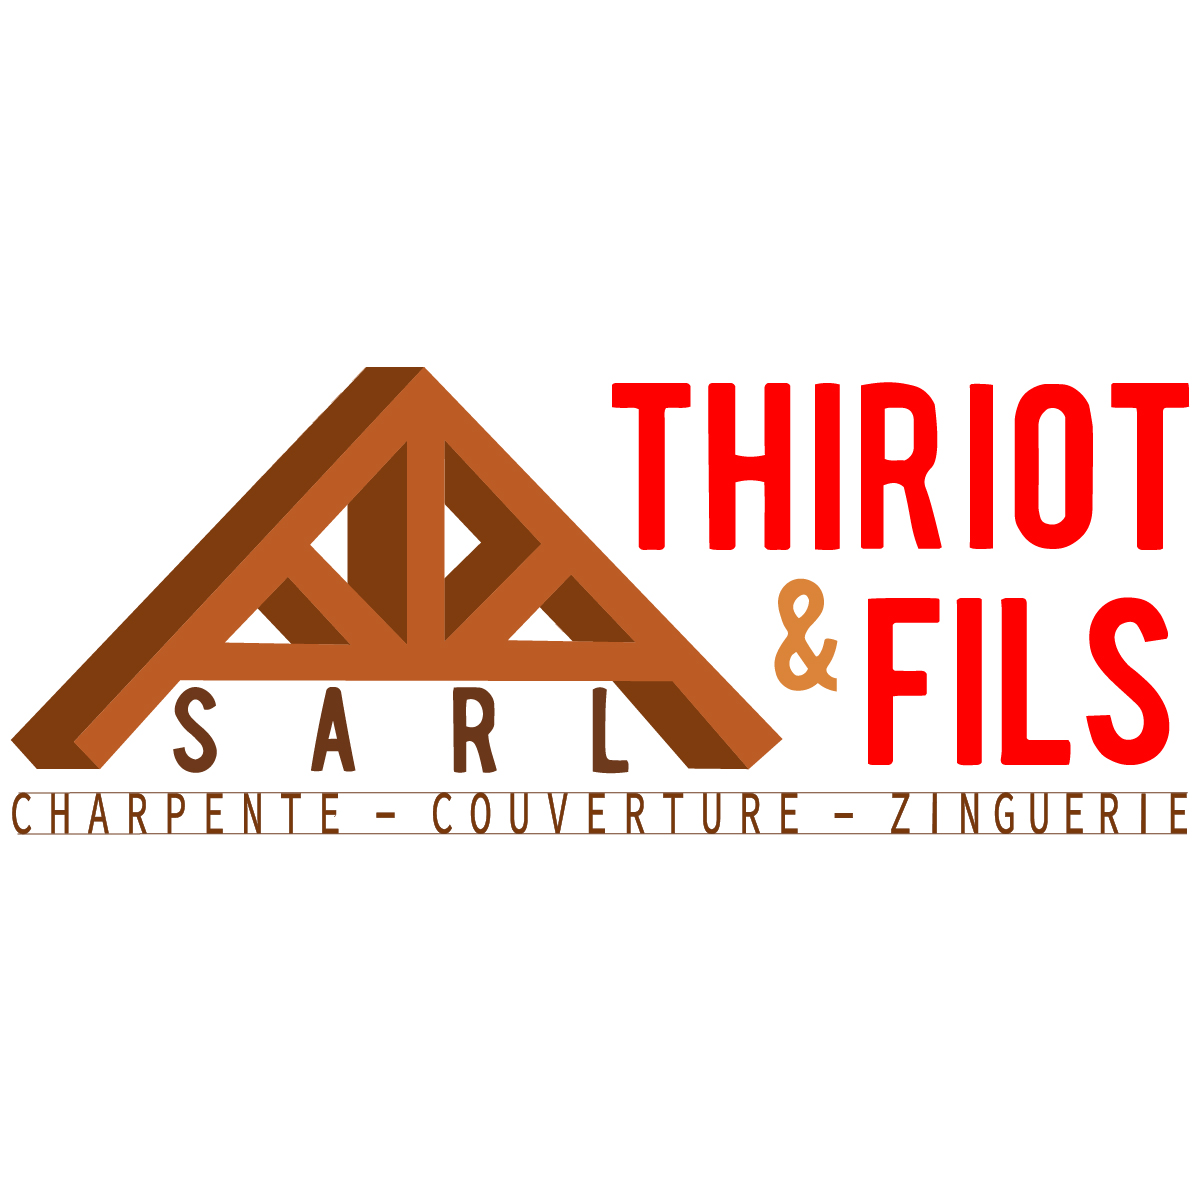 (c) Thiriot-fils.com